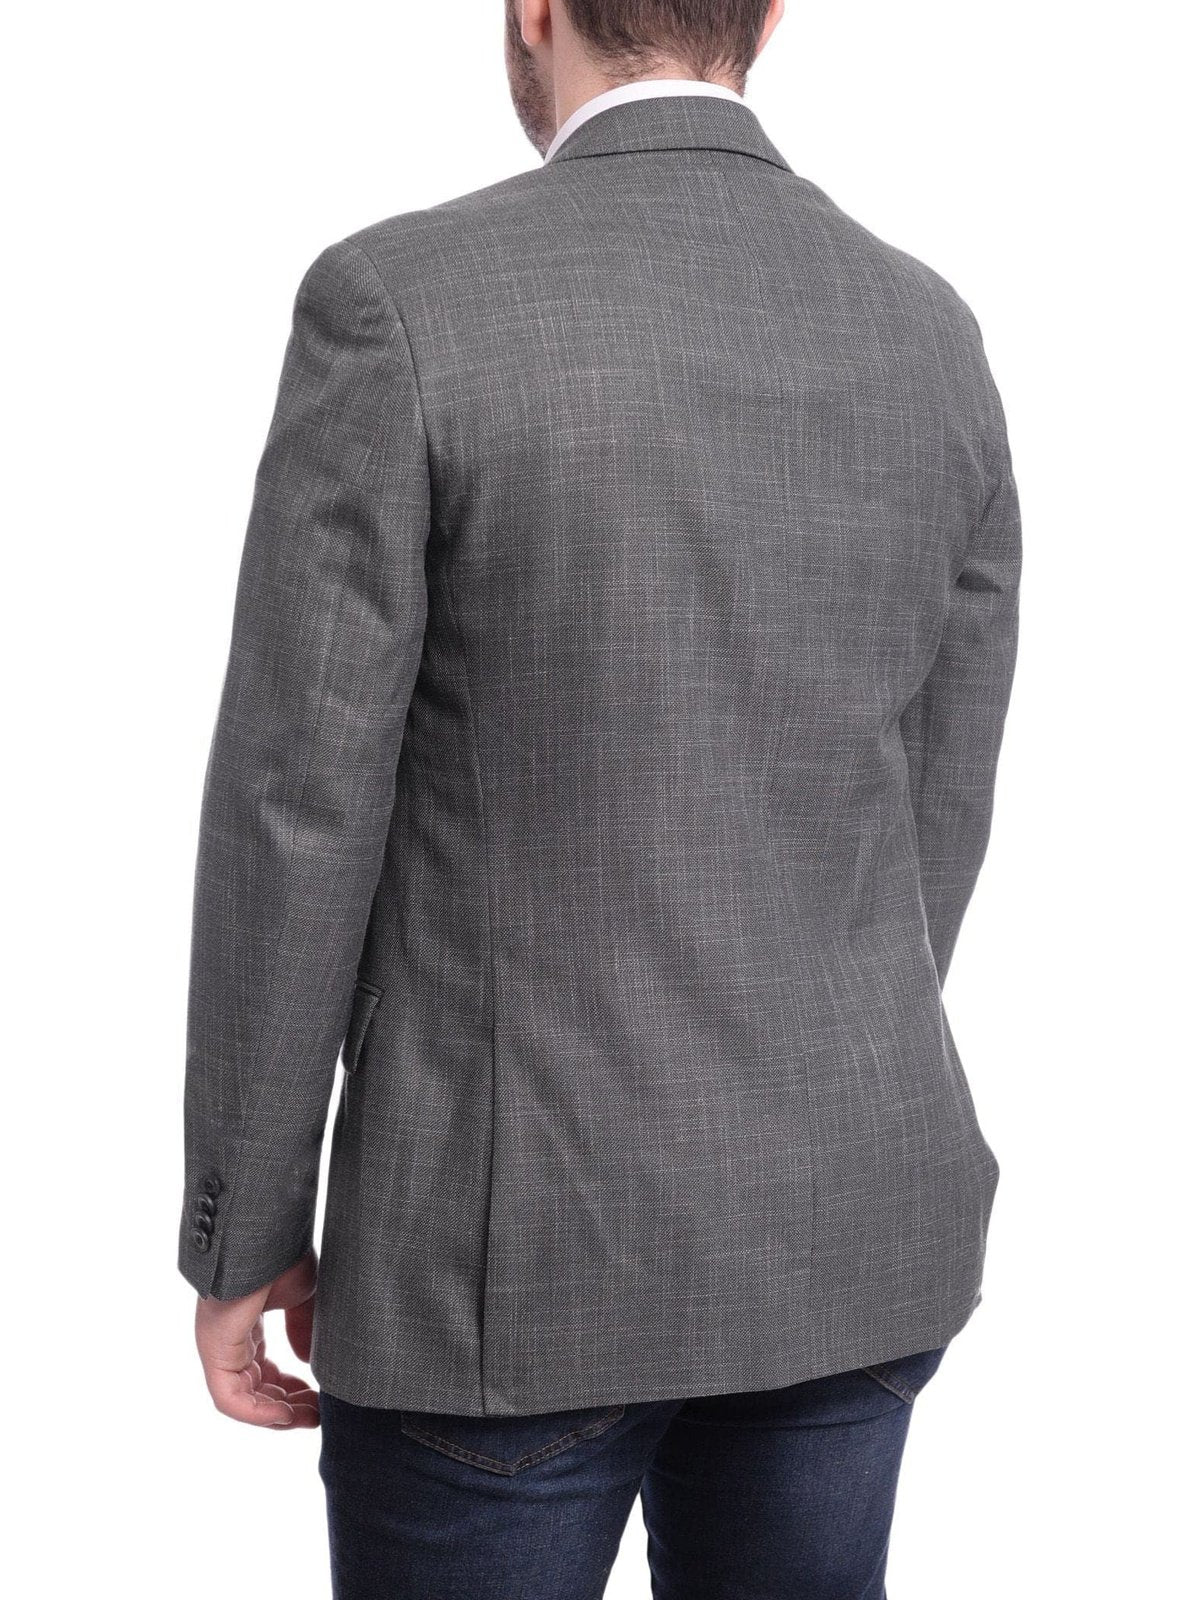 Michael Kors BLAZERS Mens Michael Kors Classic Fit Solid Gray Two Button Blazer Sportcoat Jacket